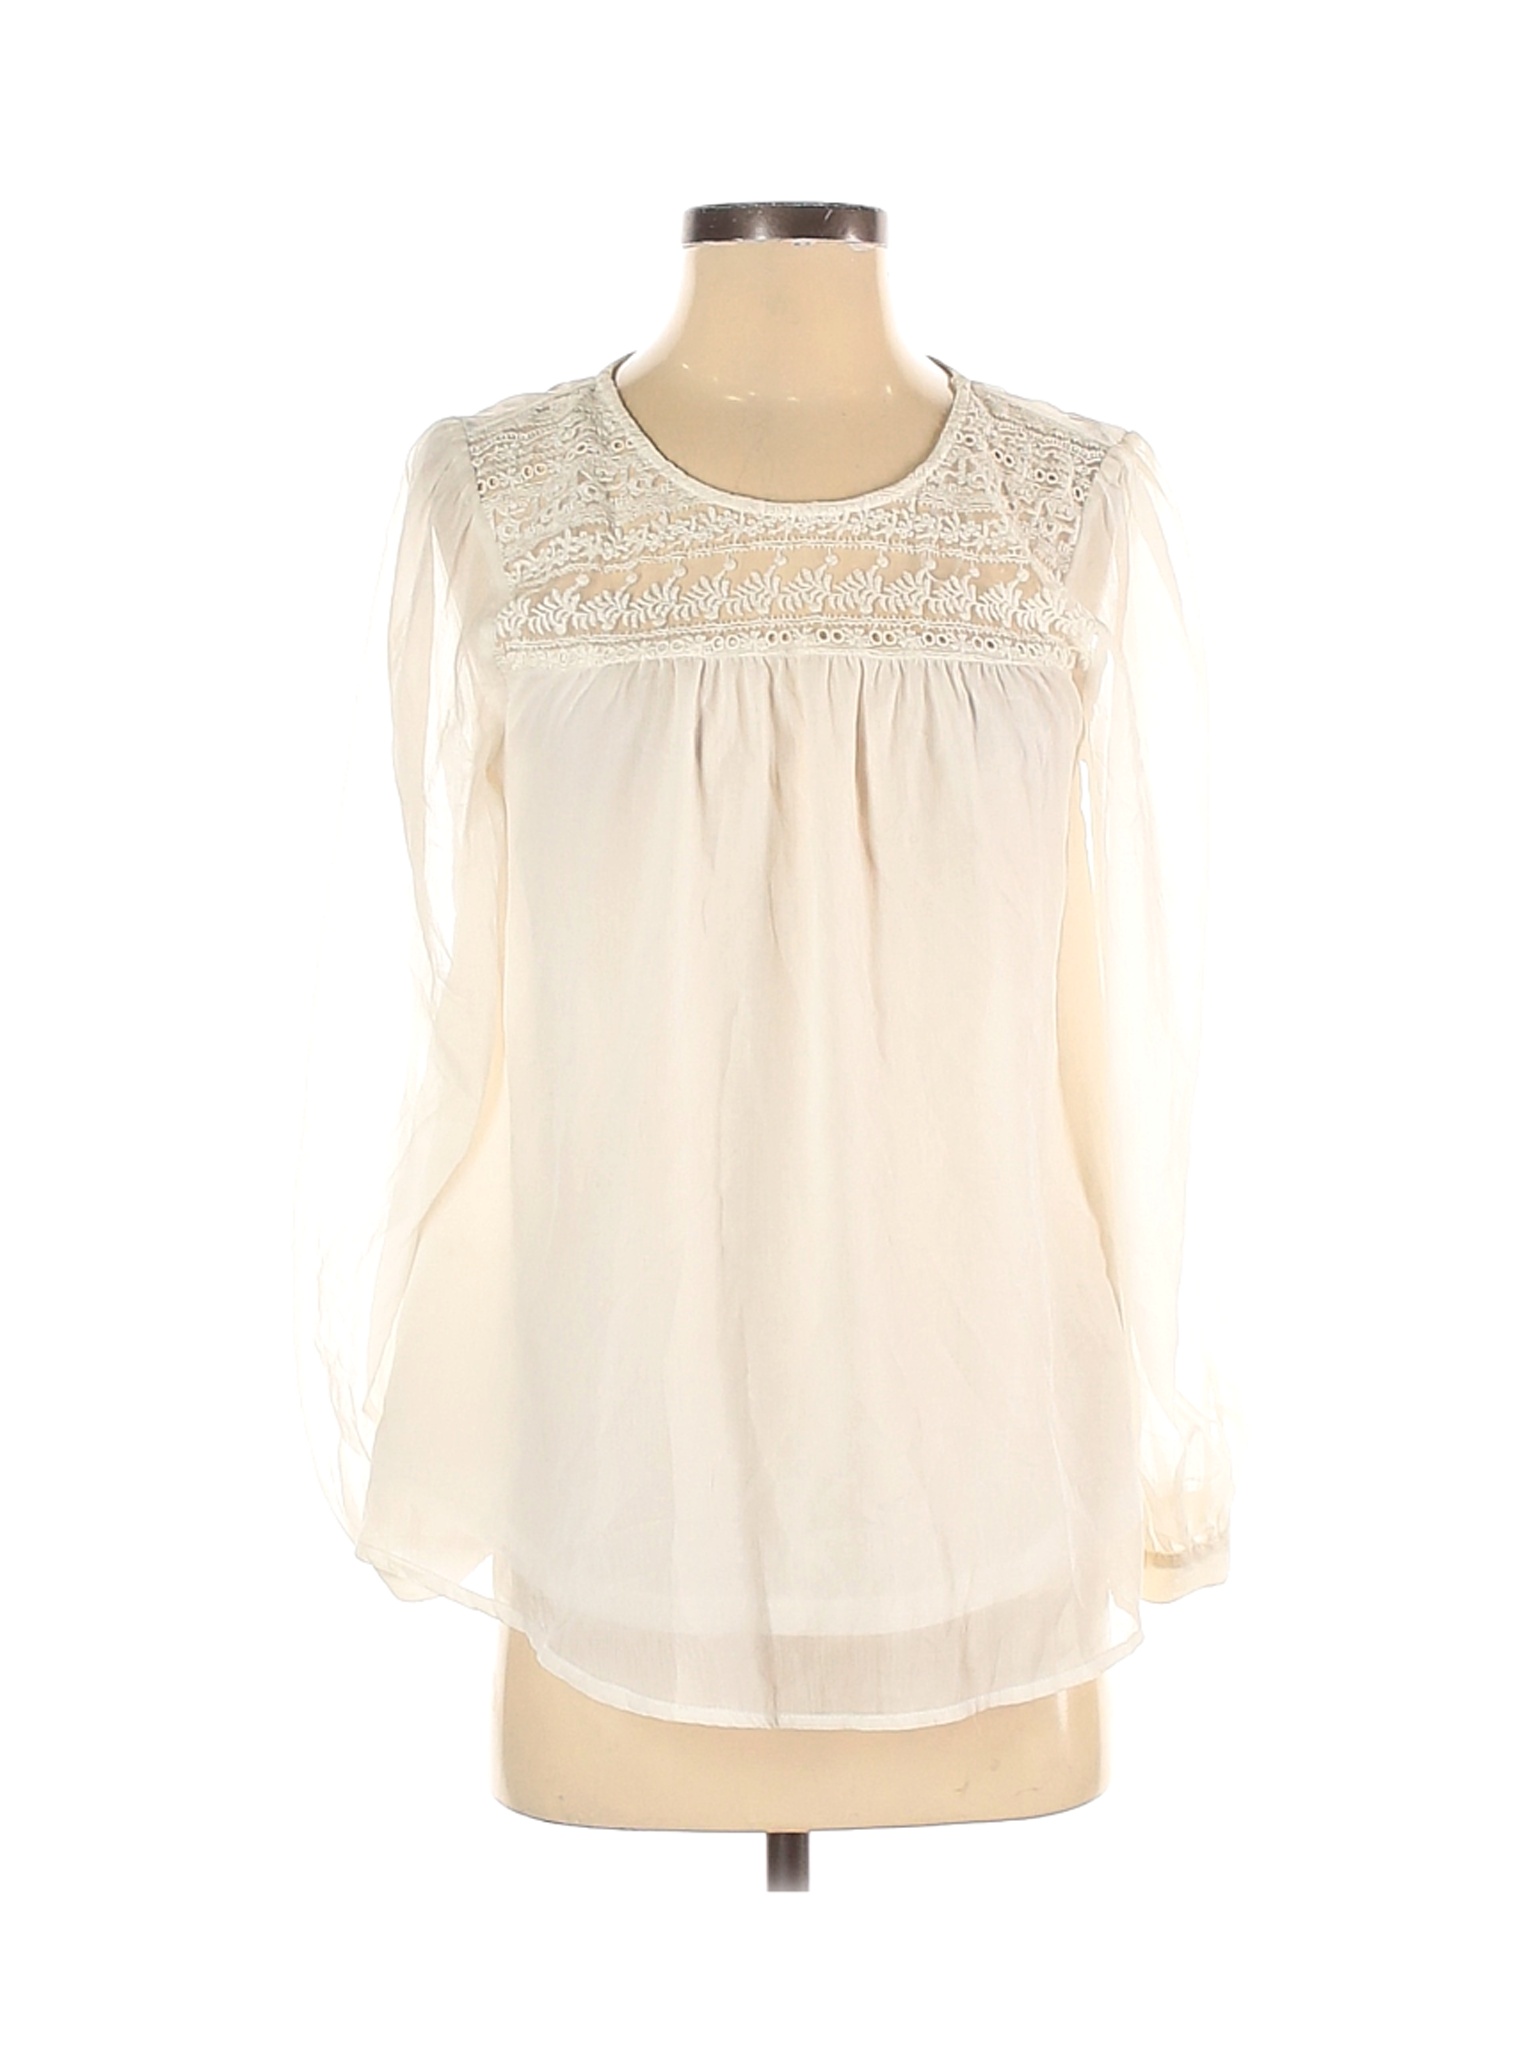 H&M Women Ivory Long Sleeve Blouse 2 | eBay